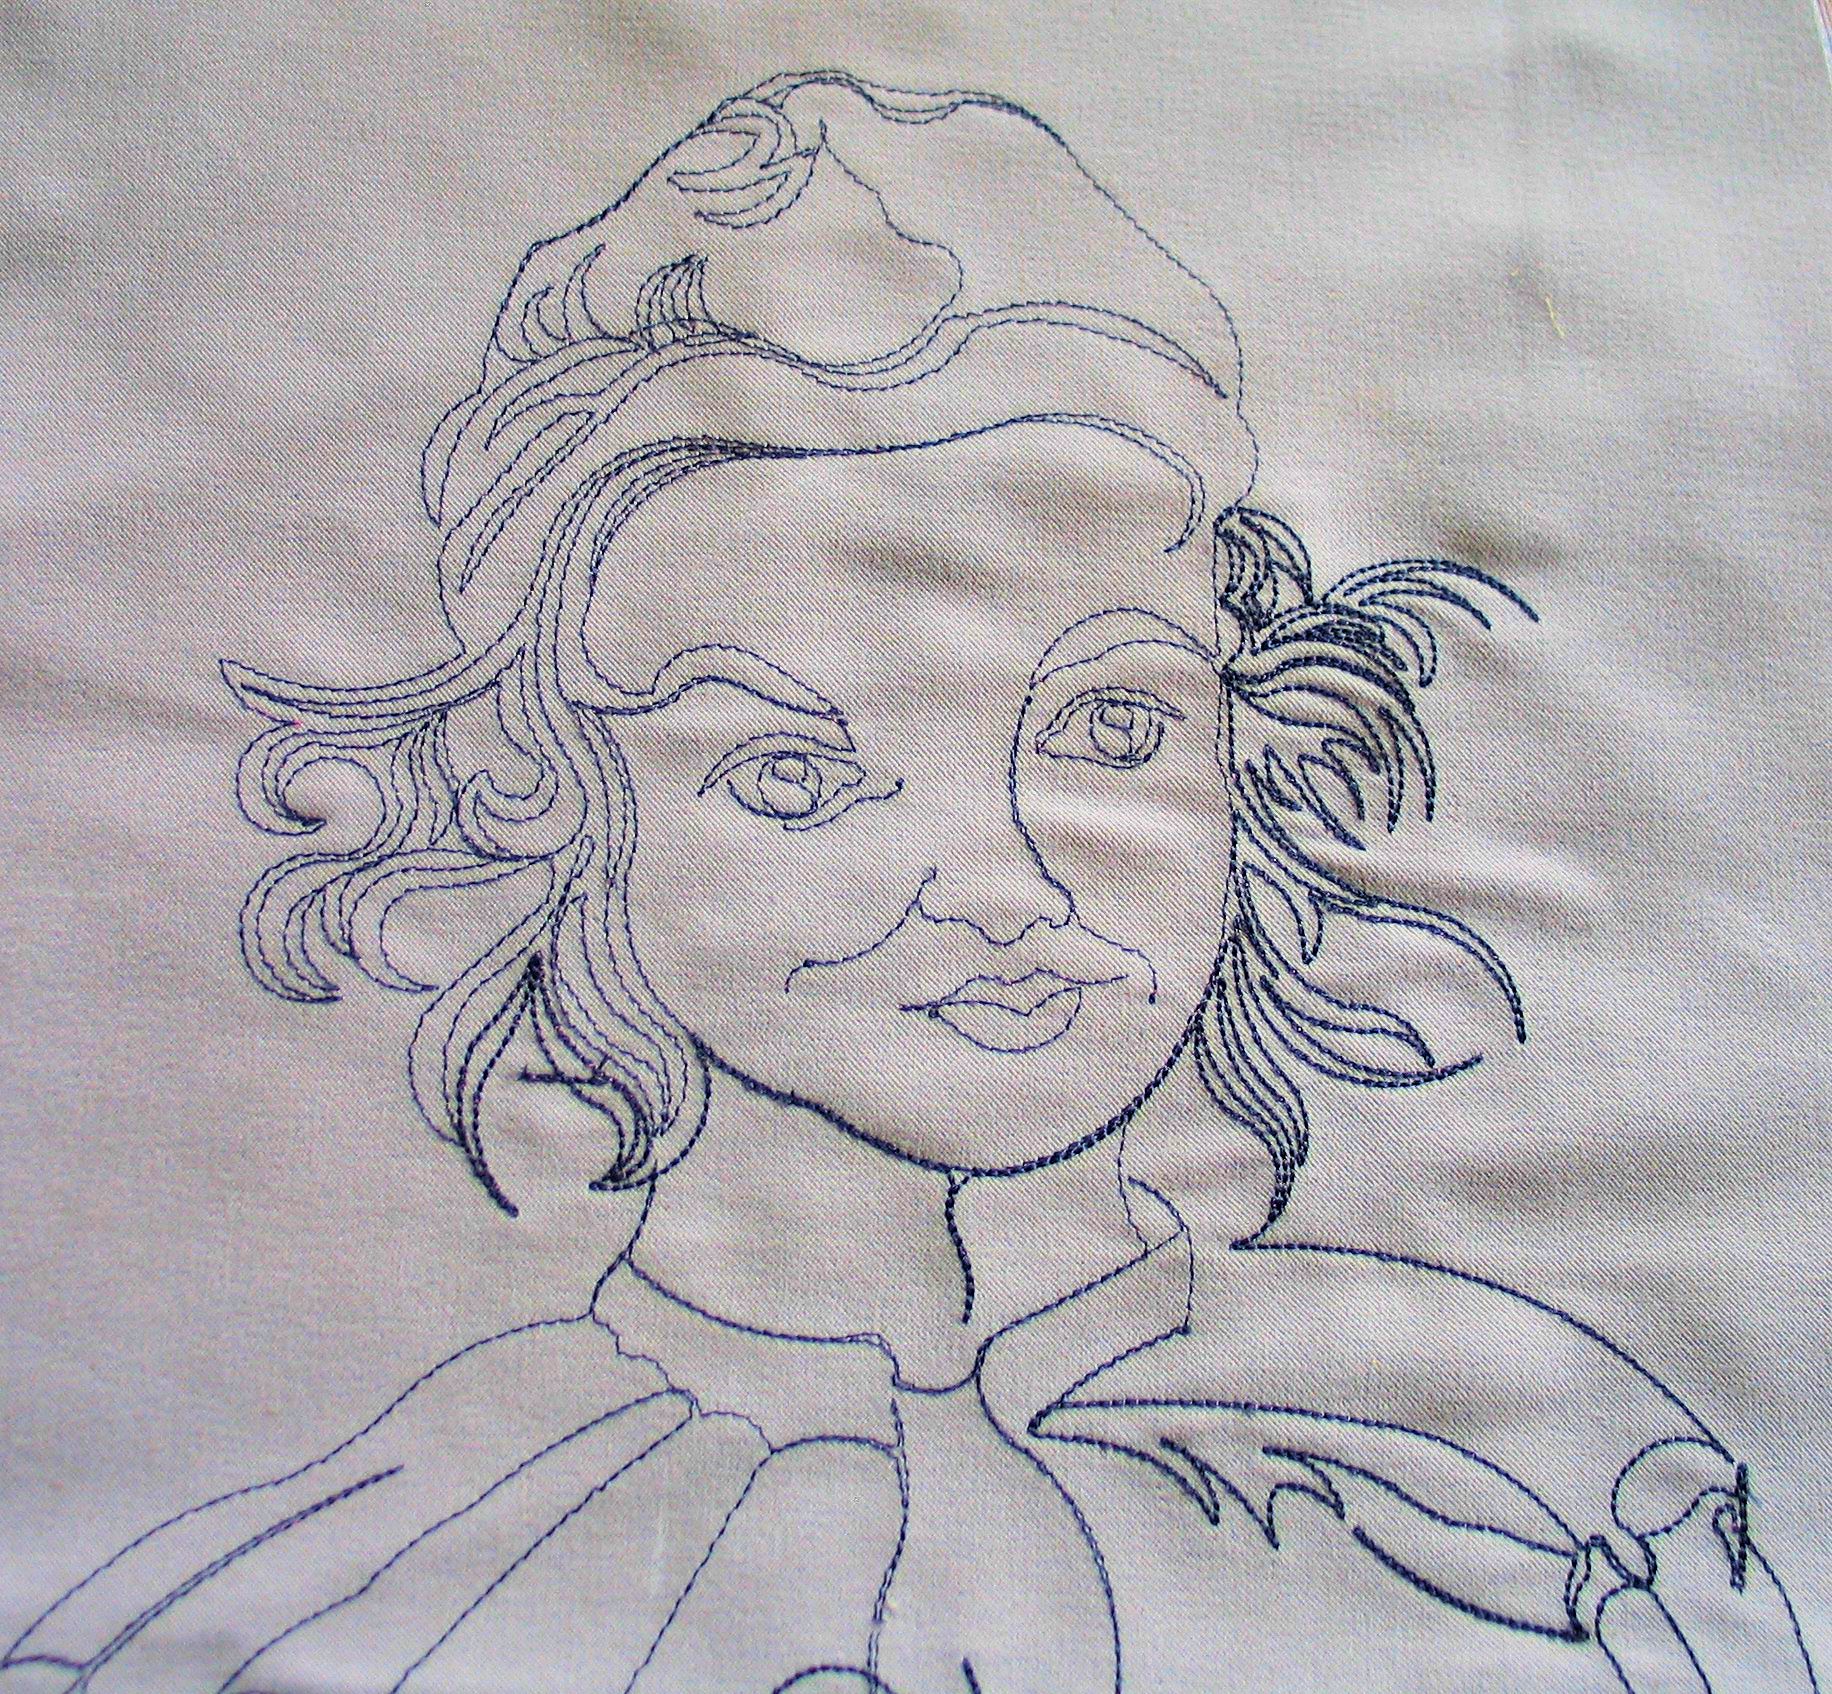 venetian-musician-redwork-embroidery